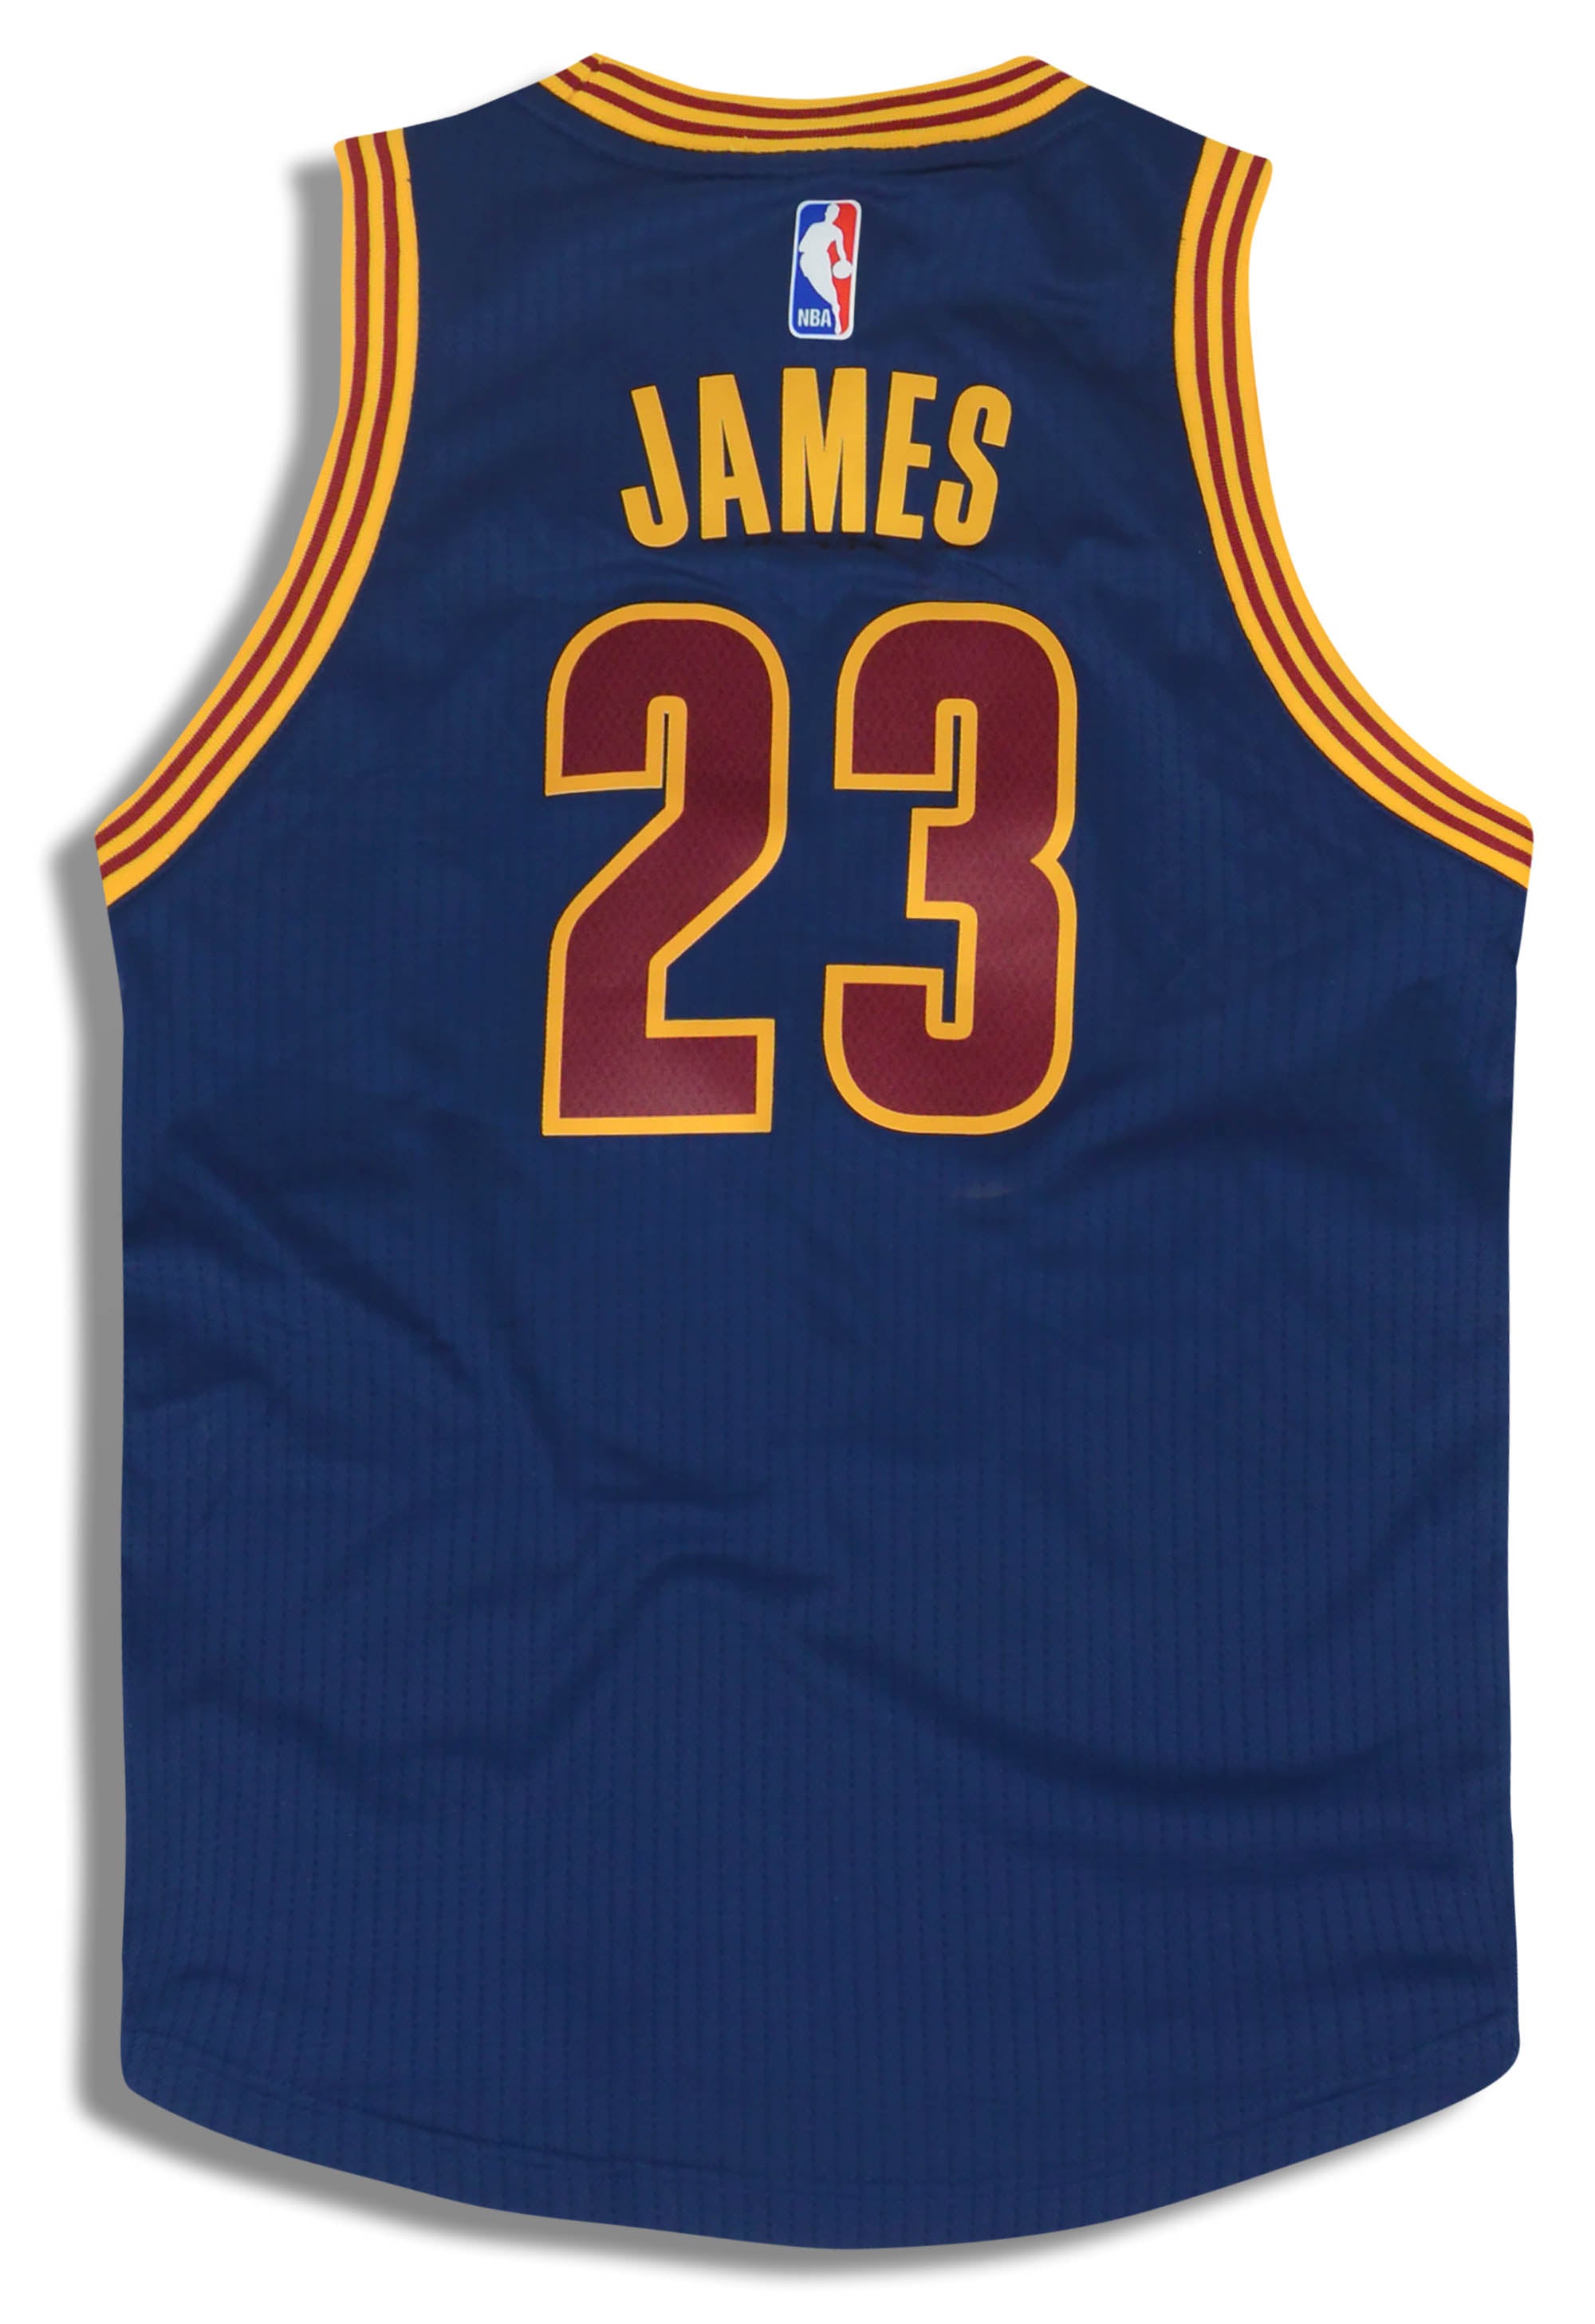 🏀 LeBron James Miami Heat Jersey Size Medium – The Throwback Store 🏀